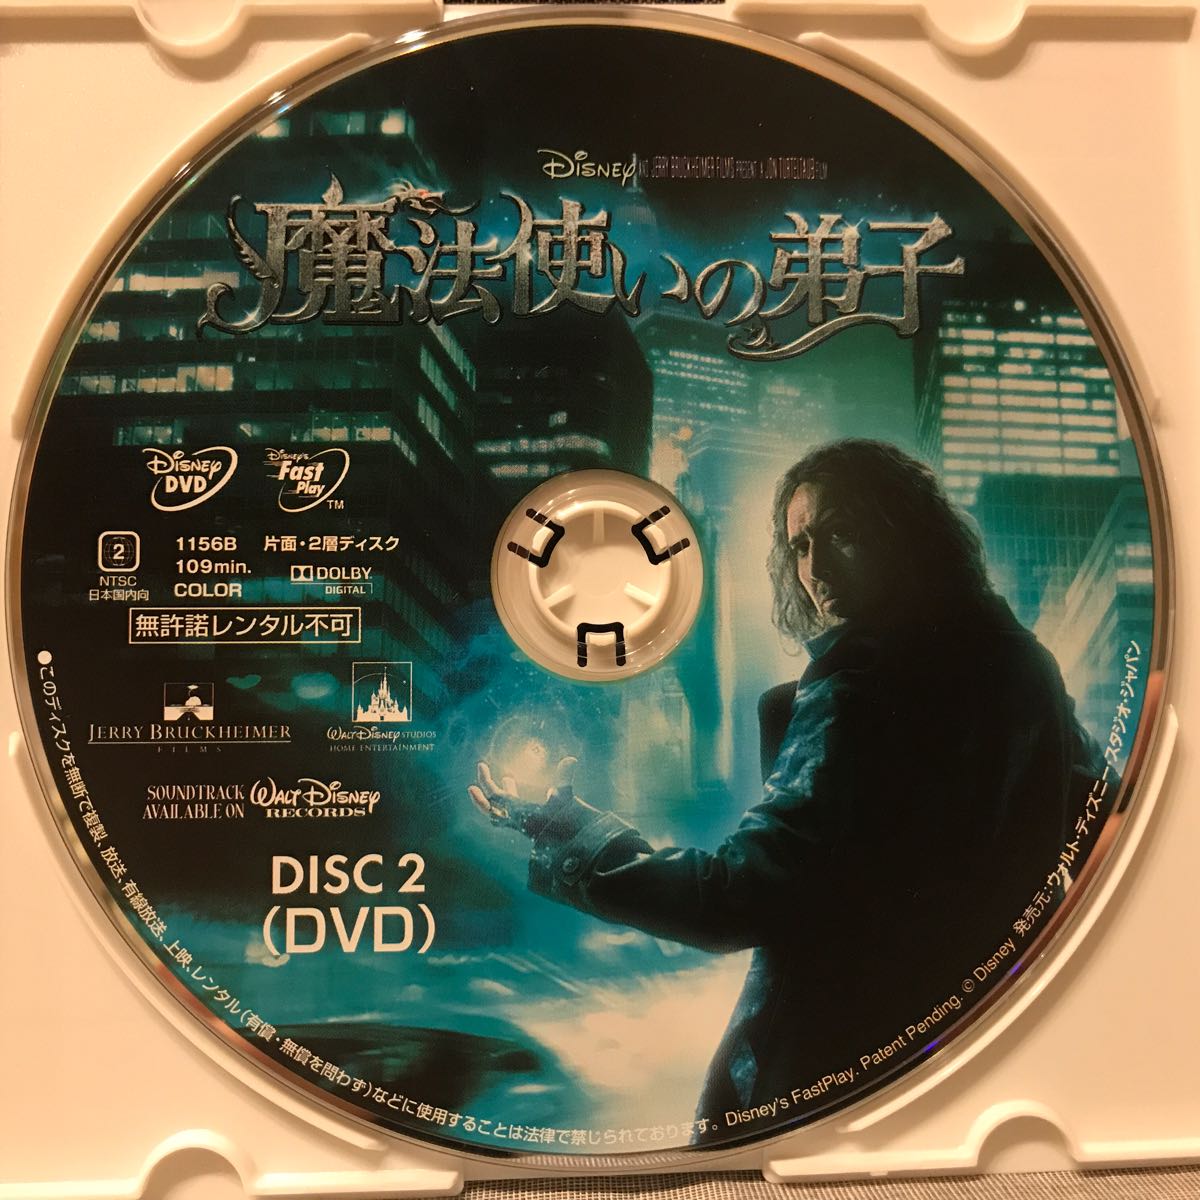  Mahou Tsukai. .. Japan version DVD disk only Nicholas * Kei ji J * bar che ru moni ka* bell chi fan tajia Disney unused new goods 